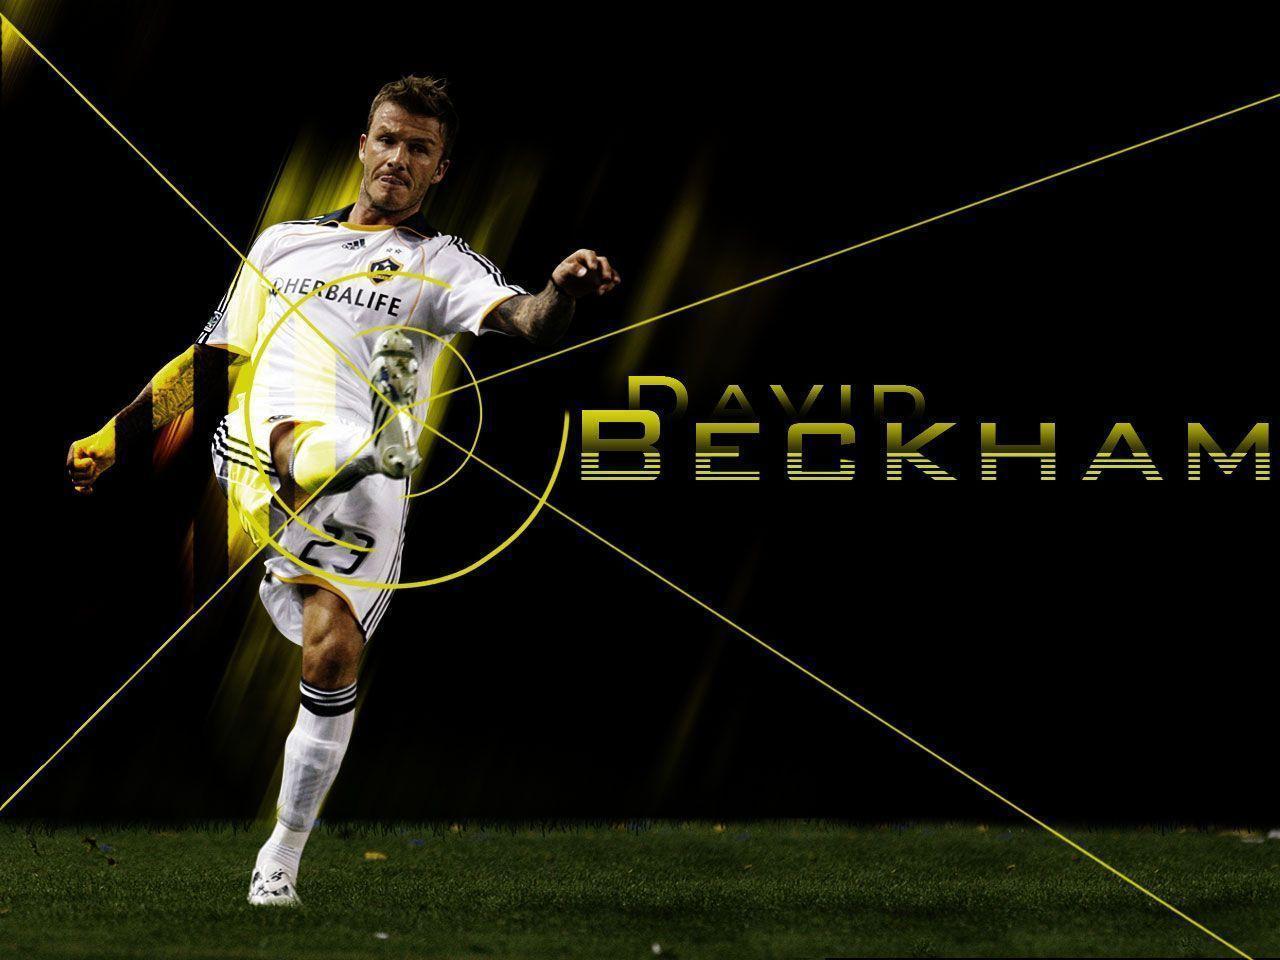 David Beckham Biography